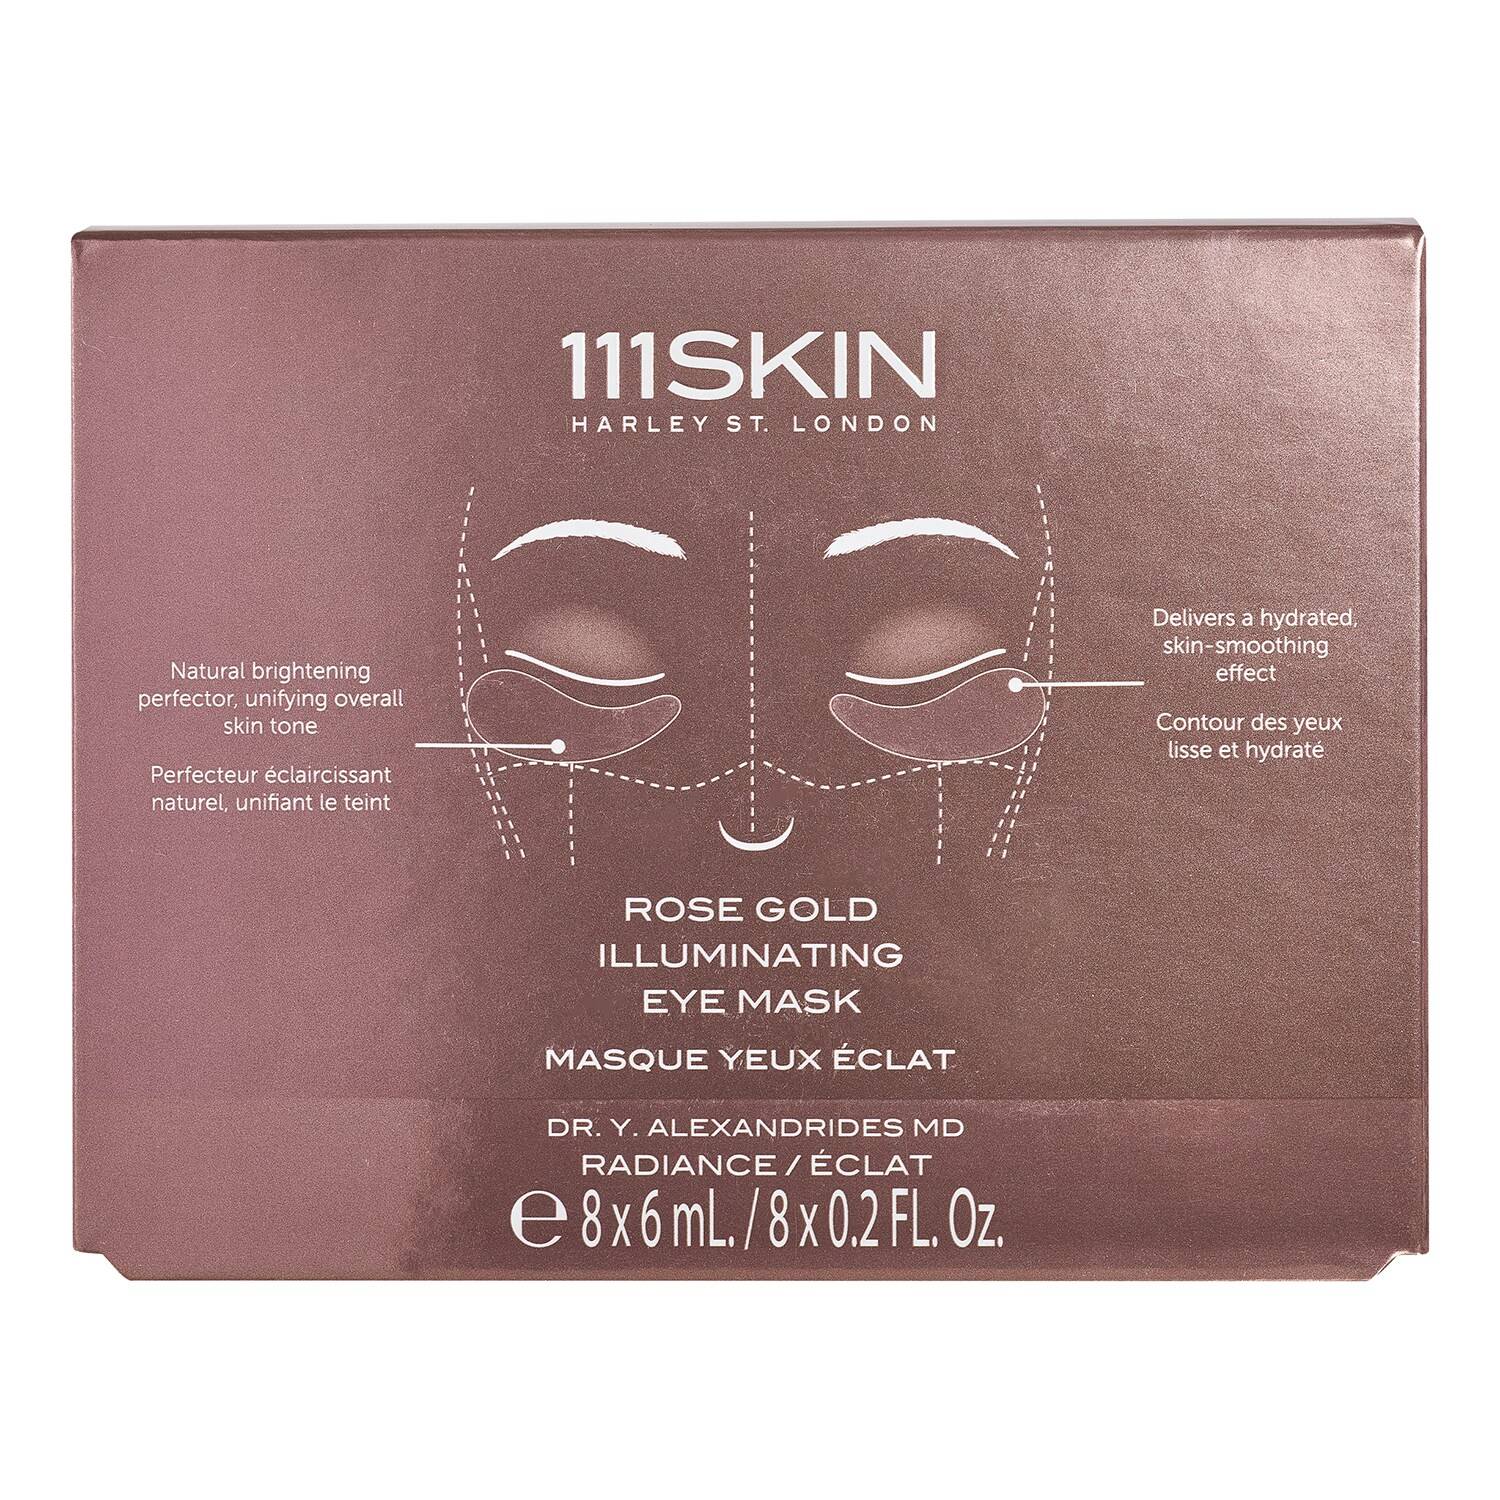 111Skin Rose Gold Illuminating Eye Mask 8 X 6Ml